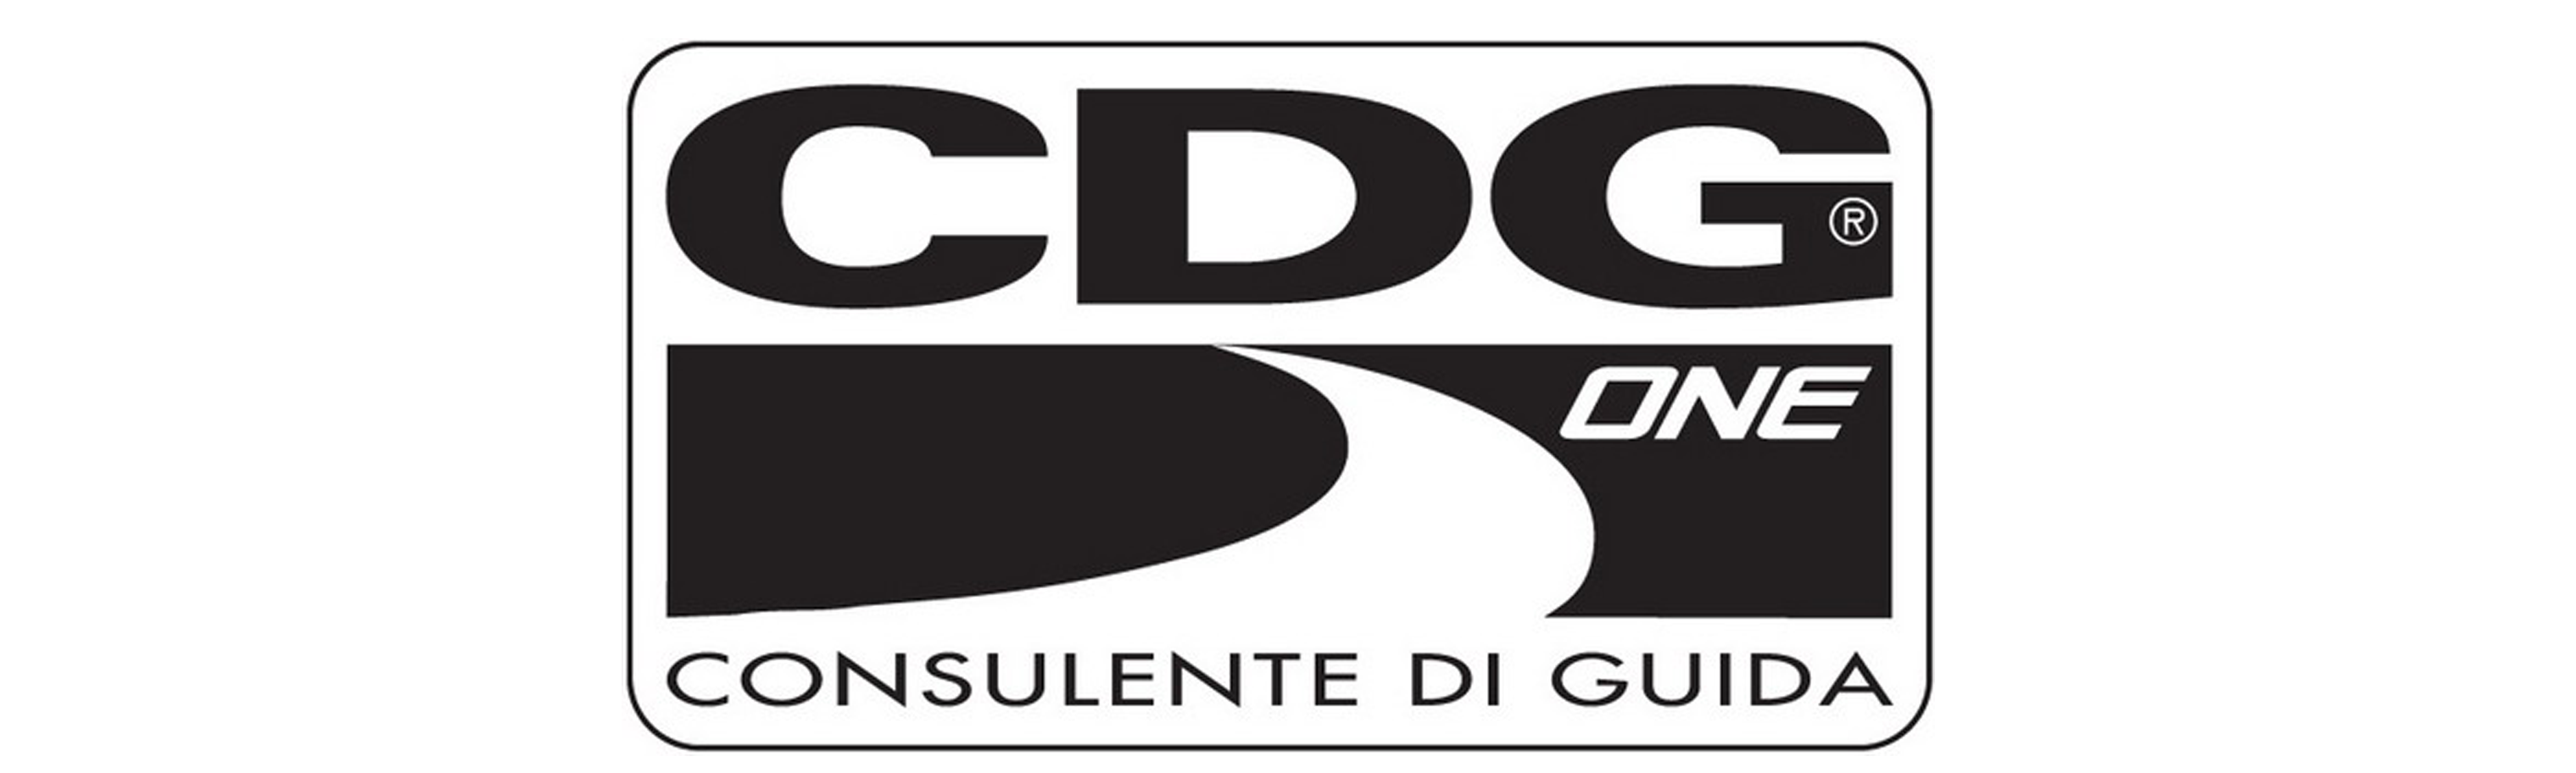 logo cdg one